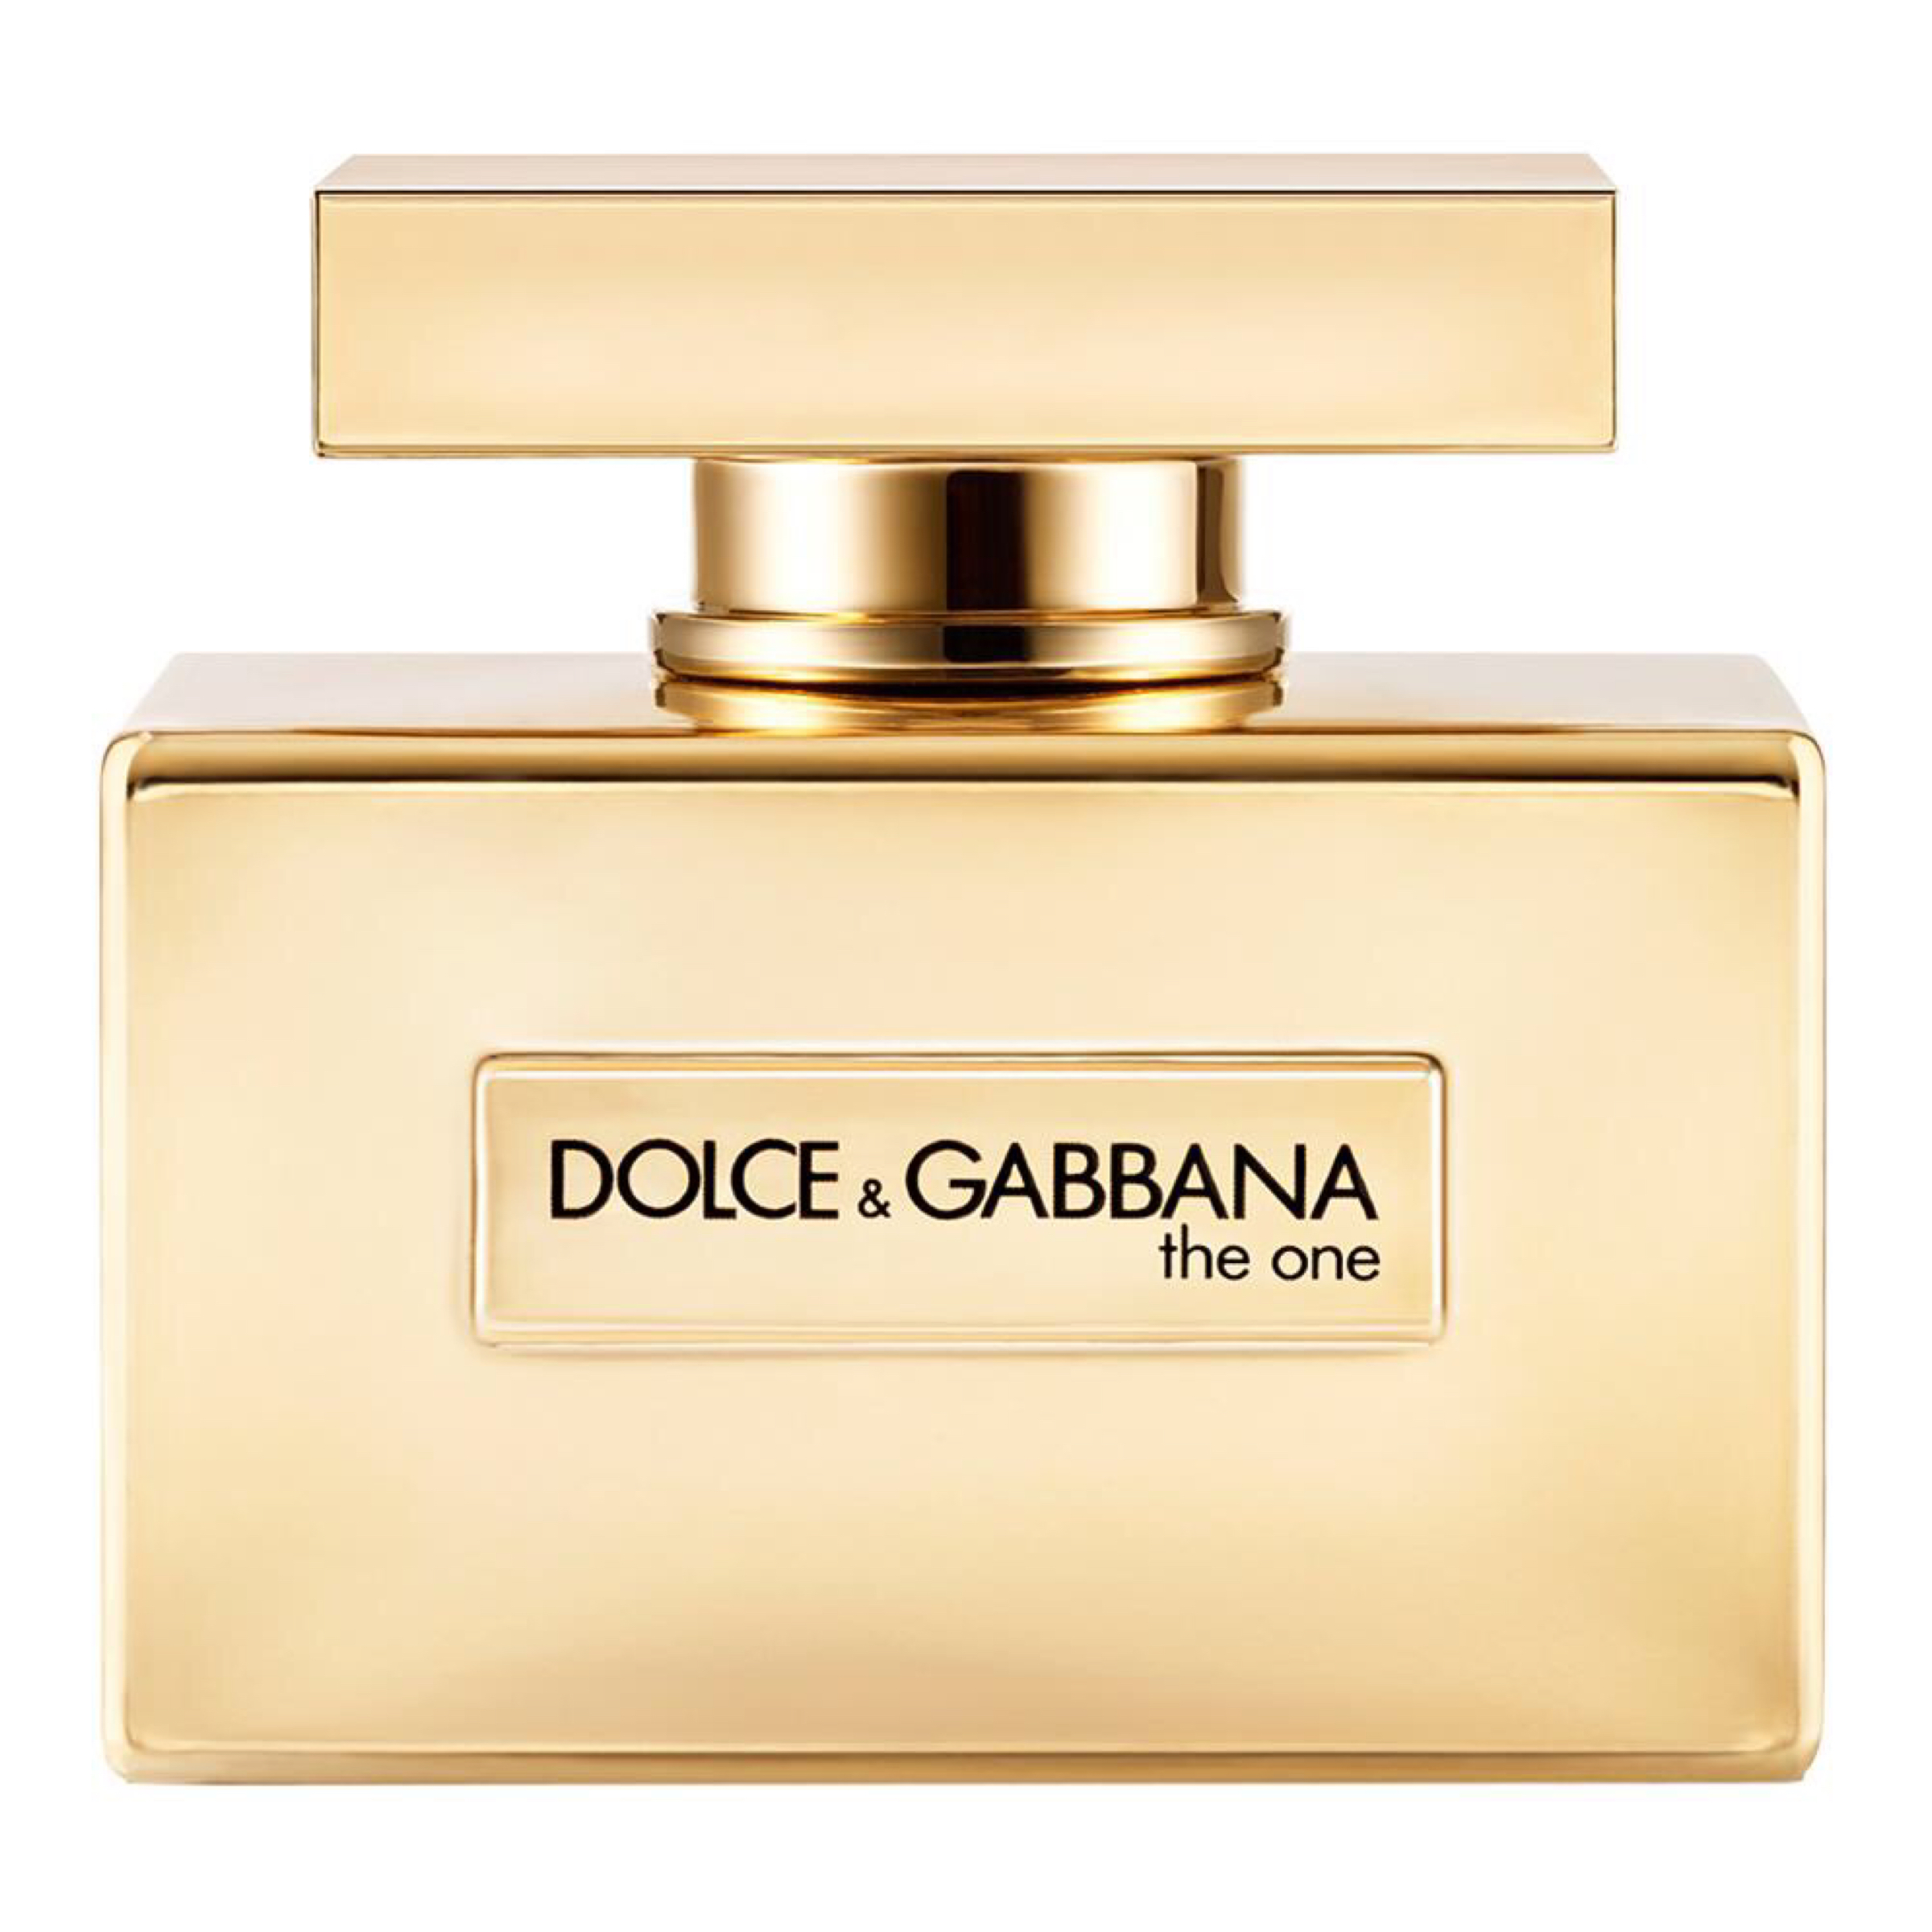 Дольче габбана ван цена. Dolce Gabbana the one Gold intense. Dolce Gabbana the one Gold Limited Edition. Dolce Gabbana the one Gold intense женские. Дольче Габбана the one Gold intense.